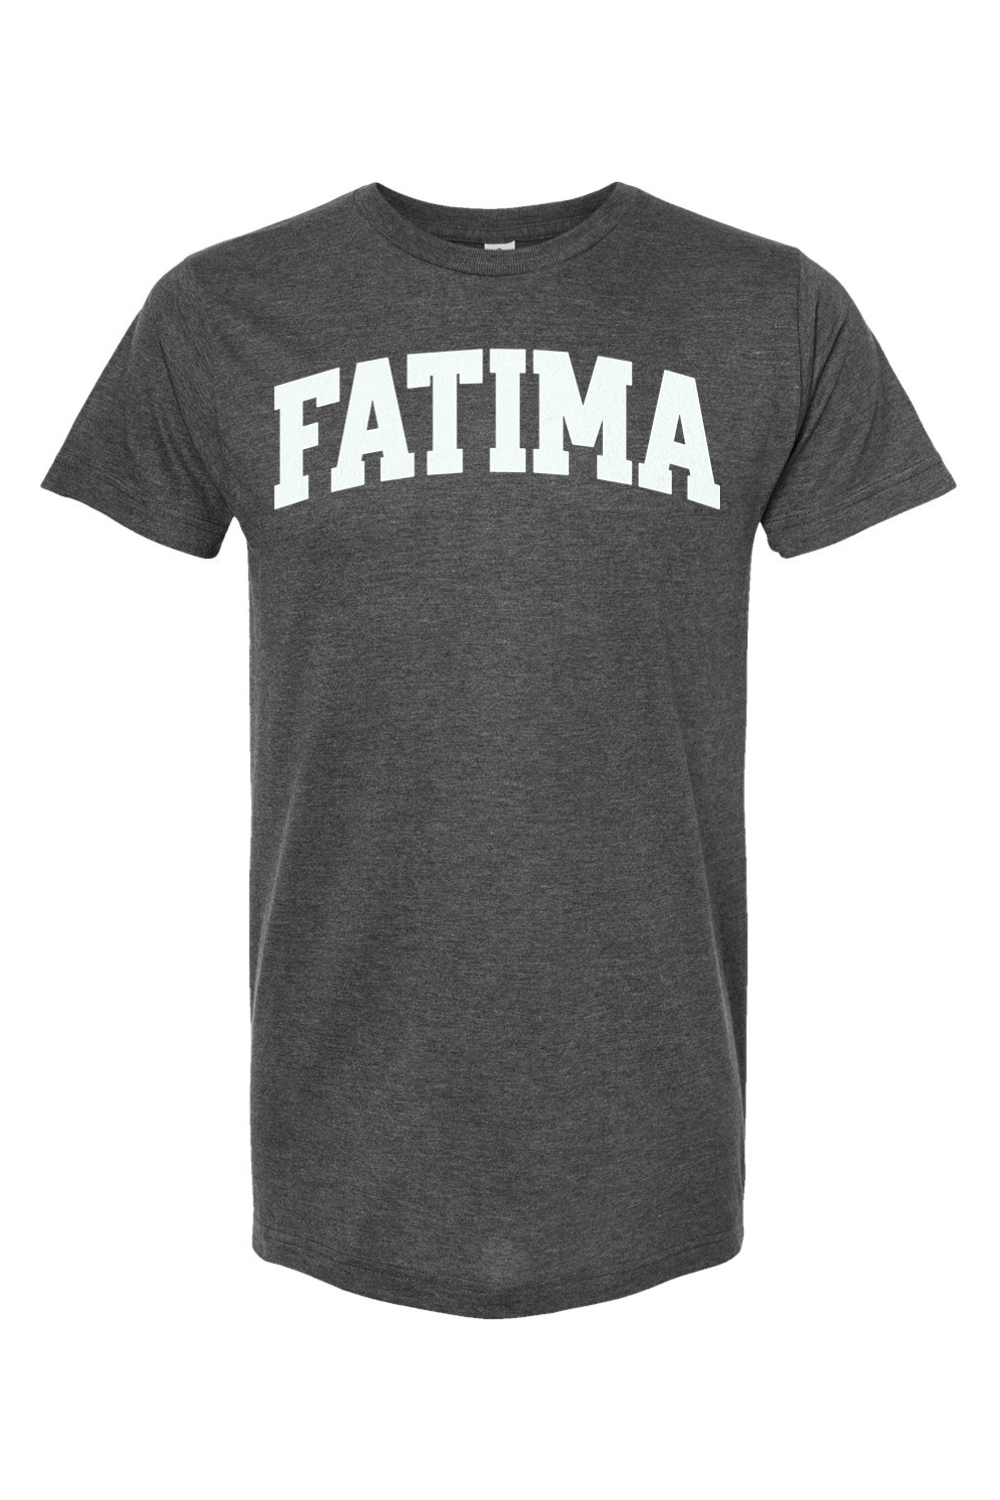 Fatima - Collegiate